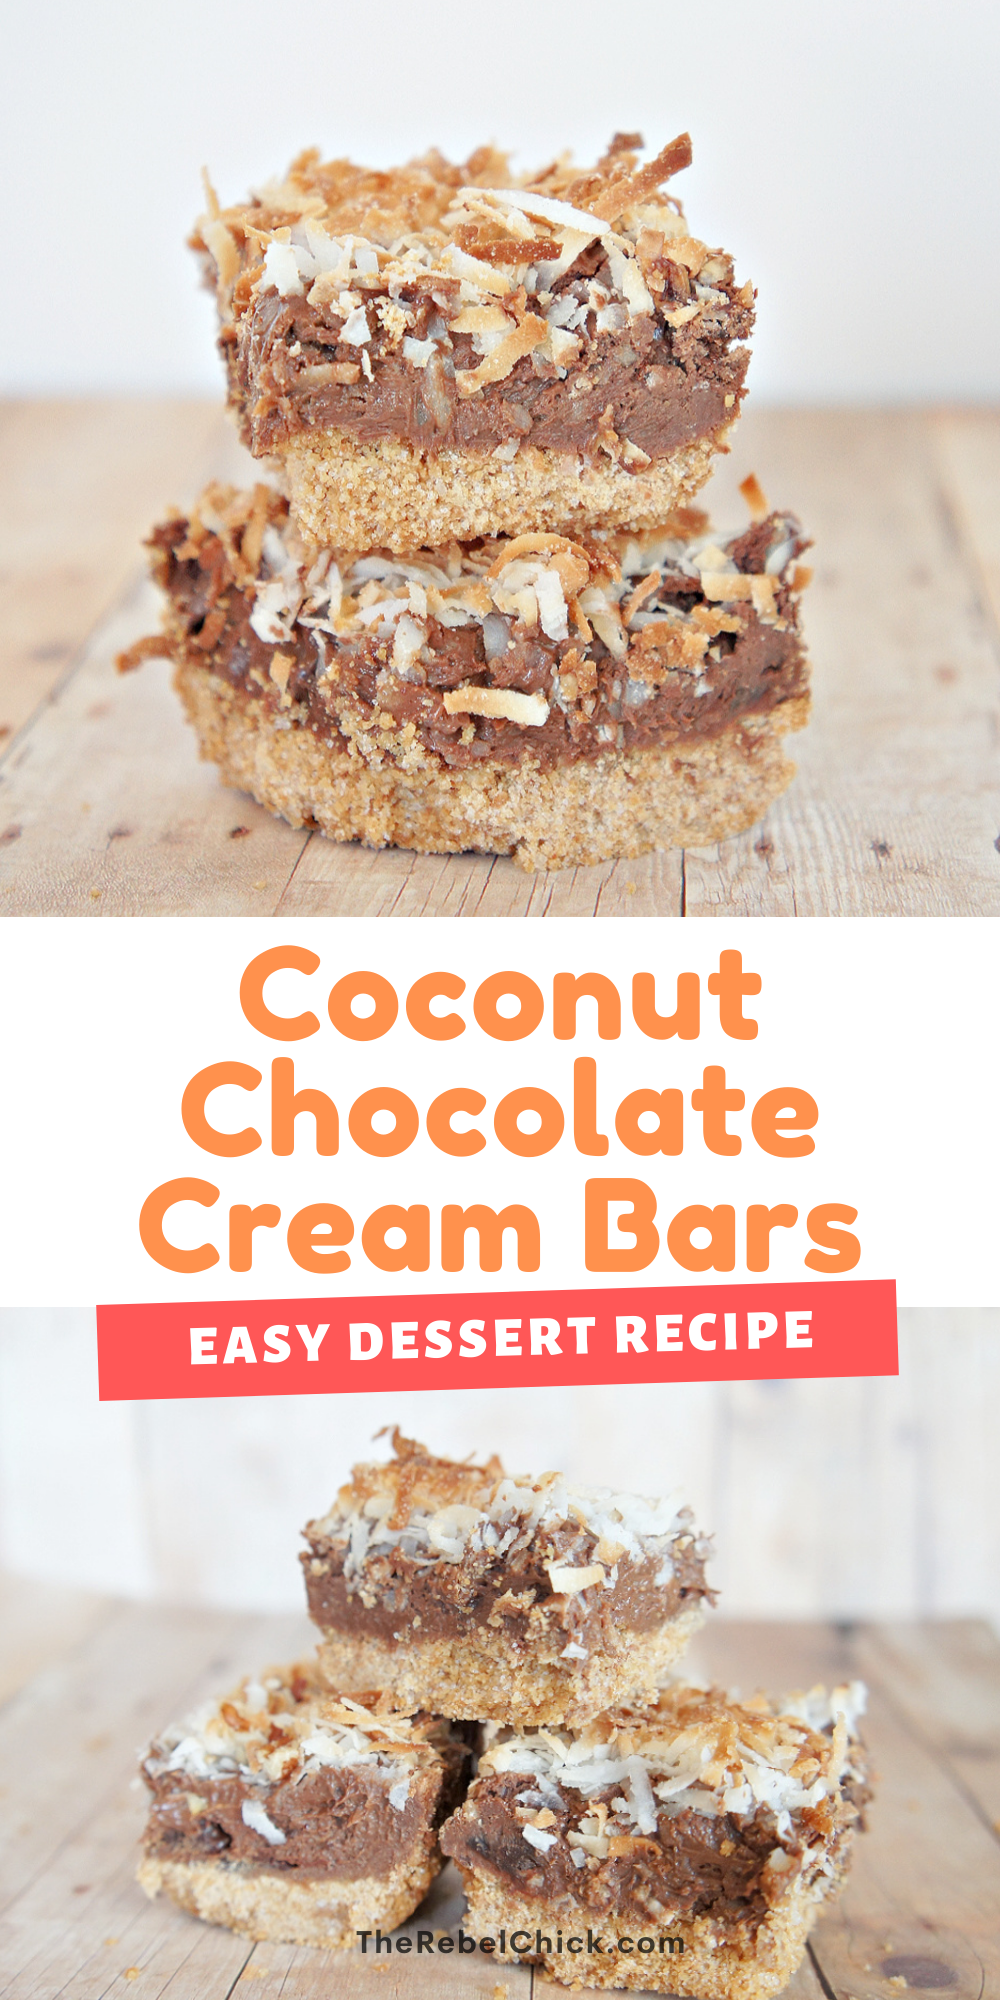 Layered Coconut Chocolate Cream Bars Recipe